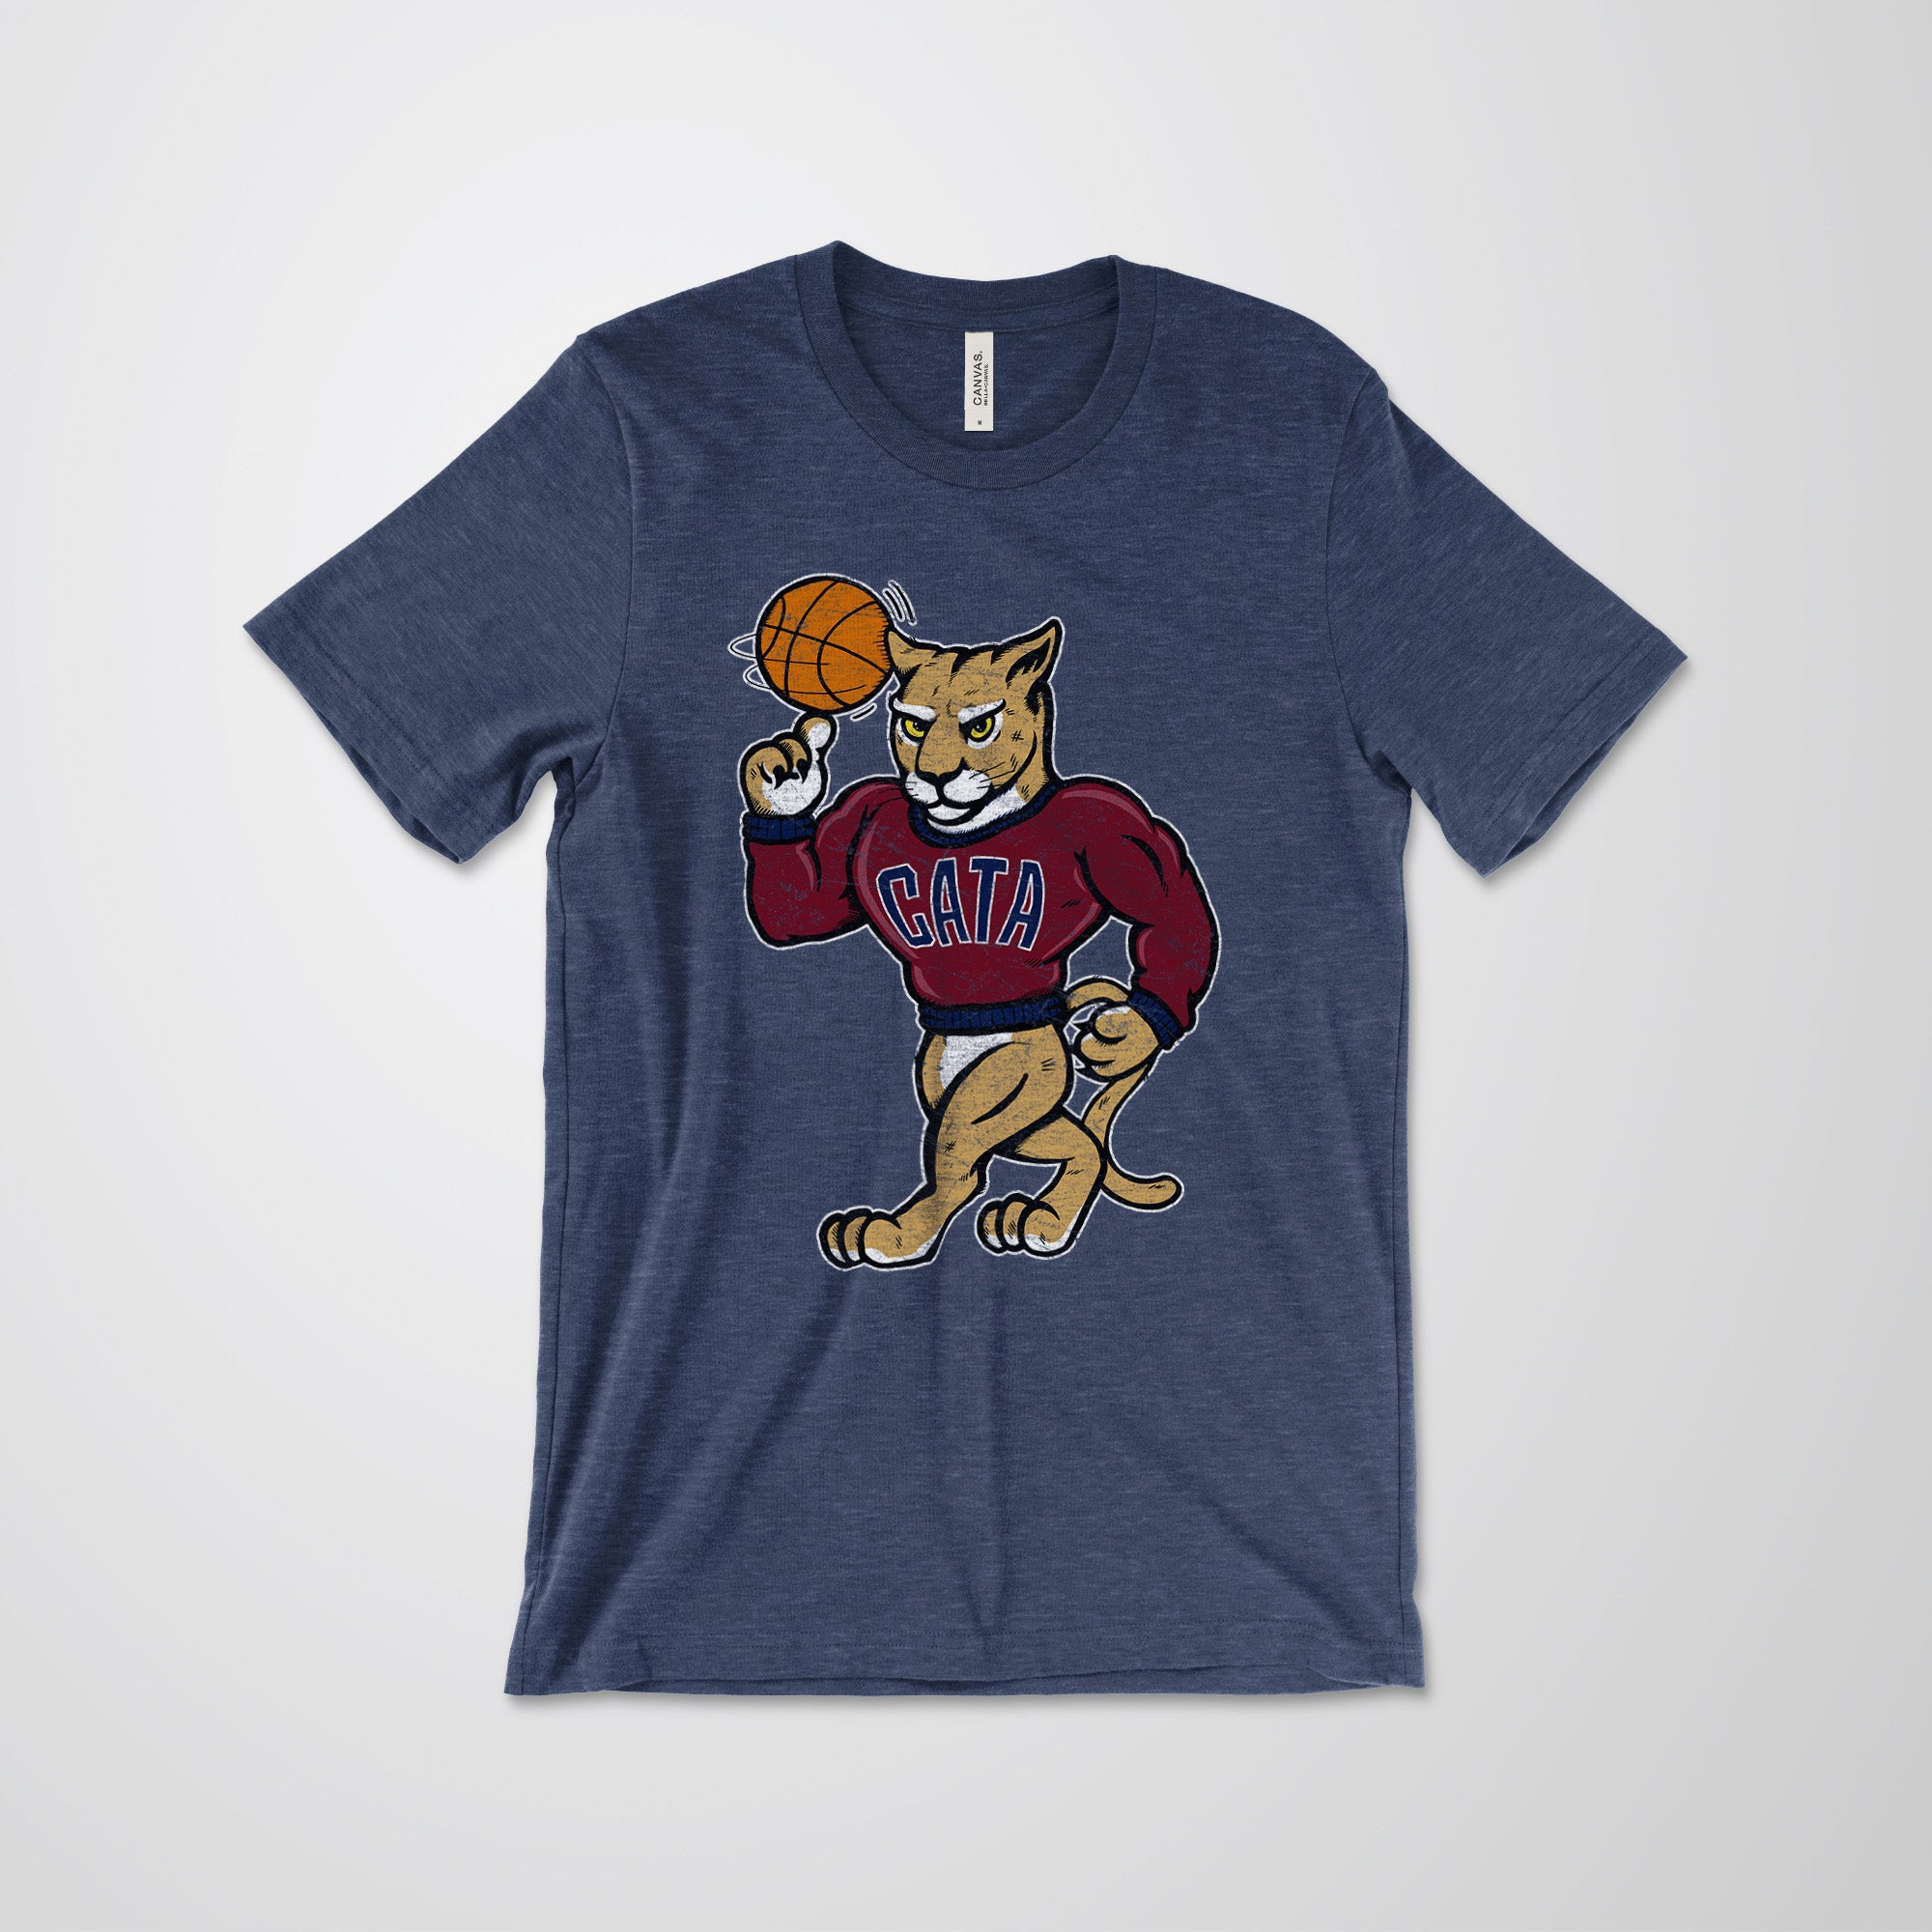 CATA Cougars Basketball Mascot Unisex Tee